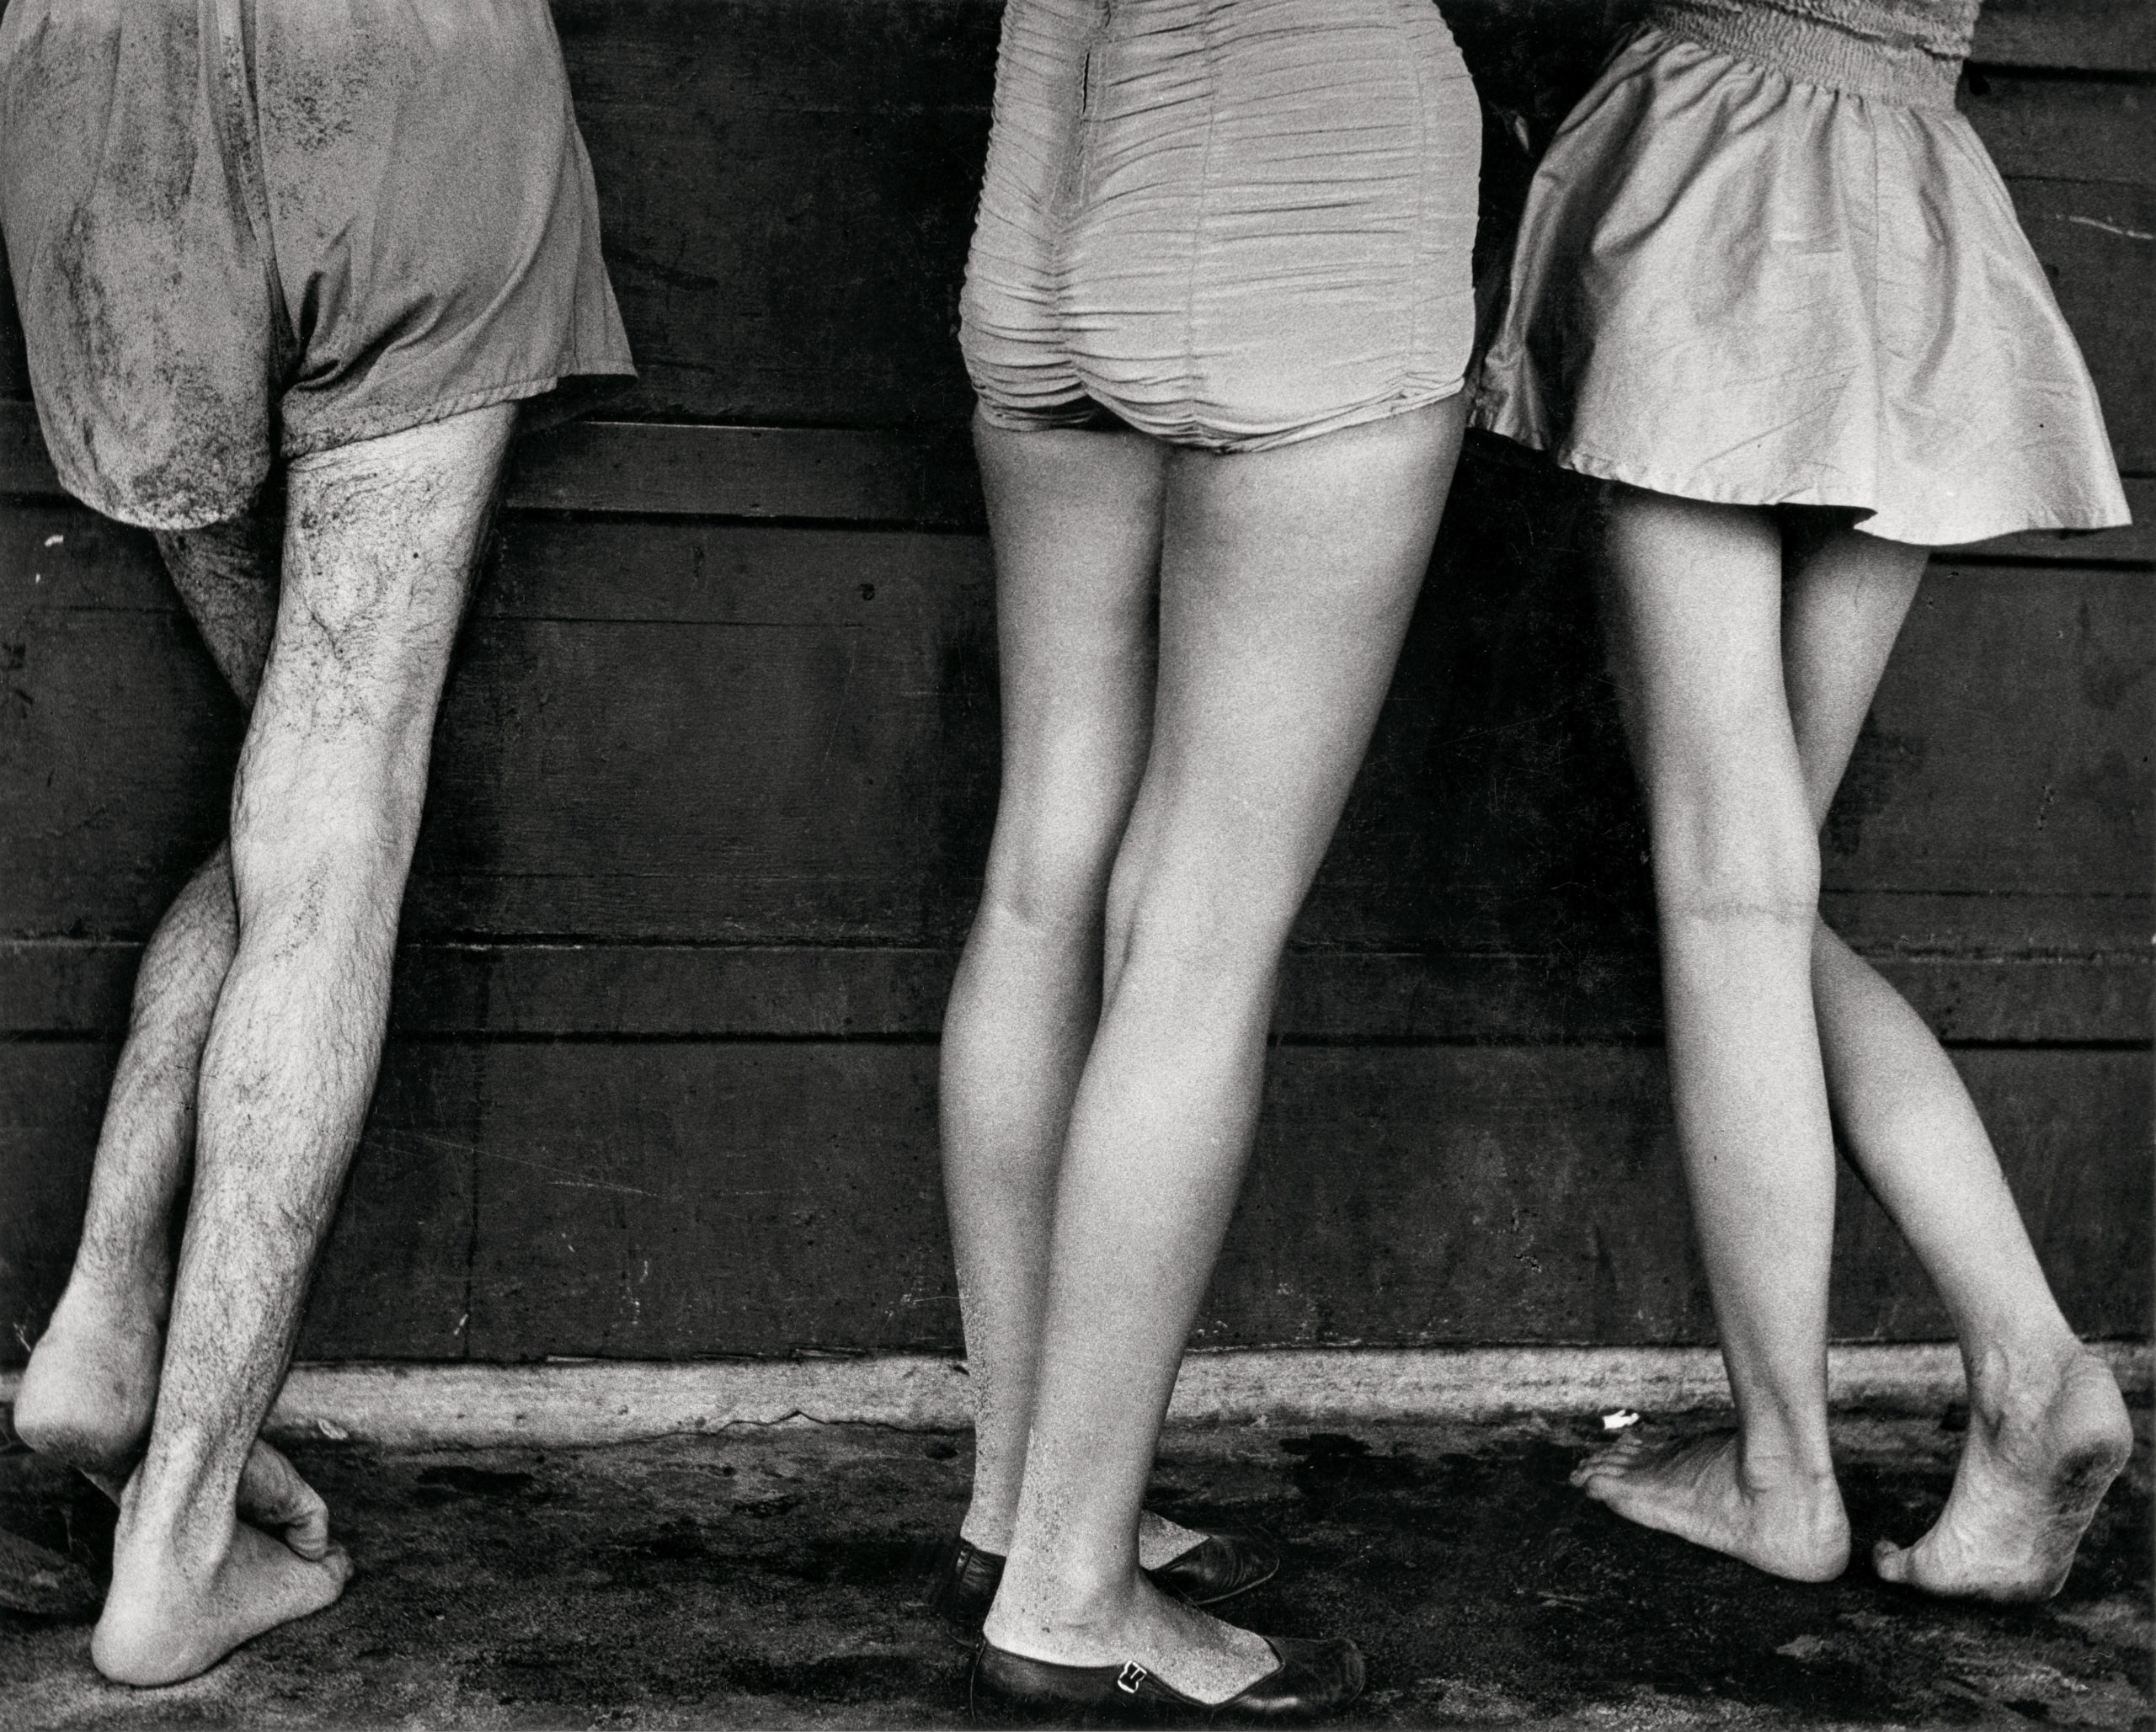 le photographe japonais Yasuhiro Ishimoto expose au Le Bal